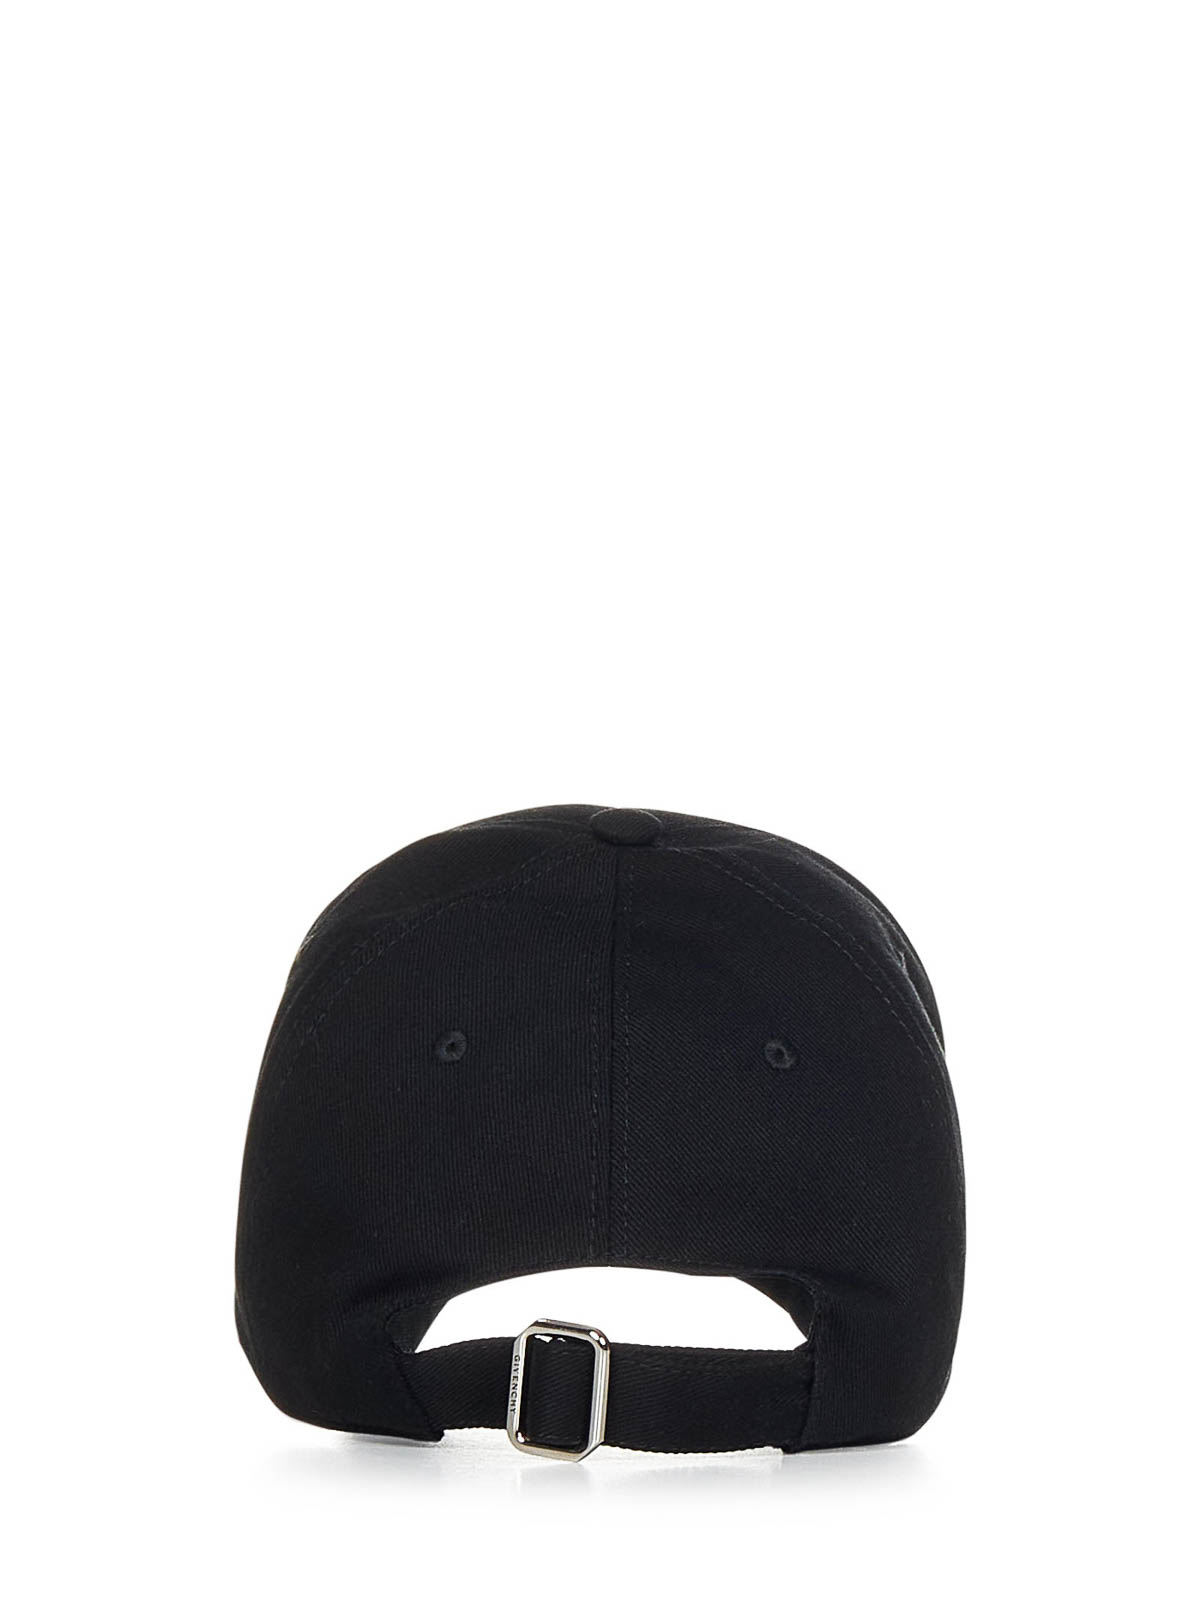 Shop Givenchy Black Cotton Twill Baseball Cap